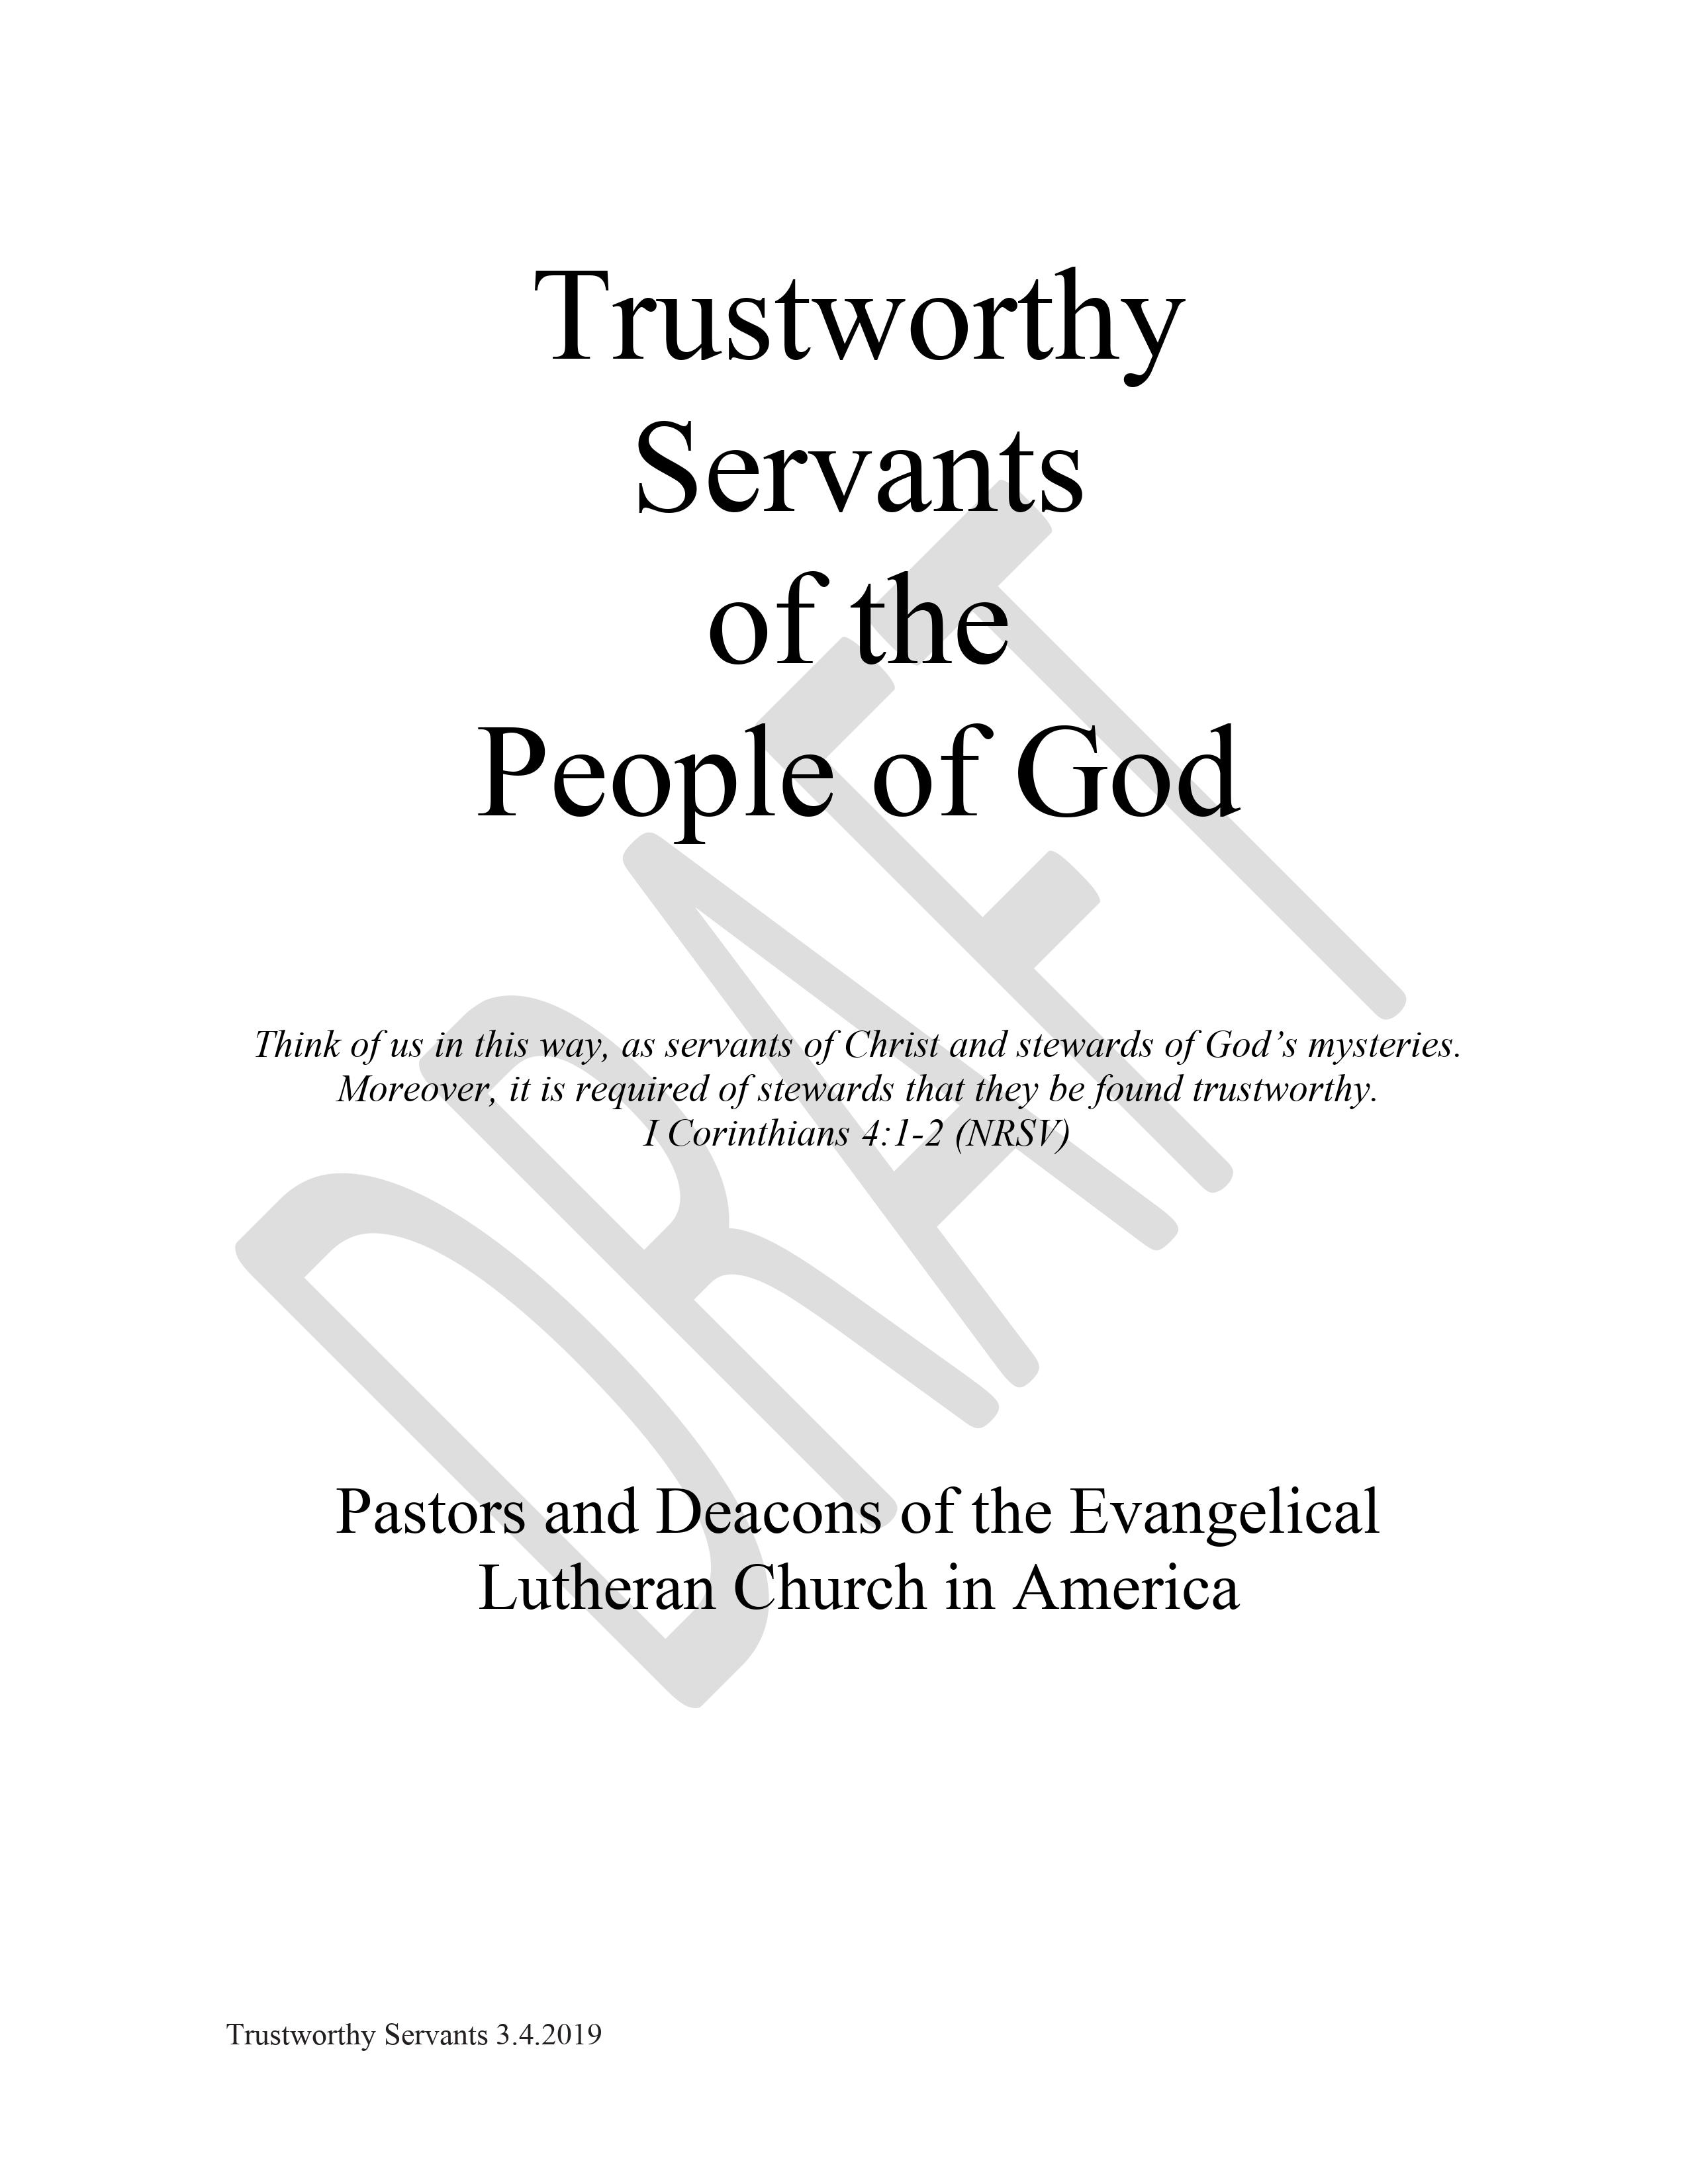 Trustworthy Servants of the People of God